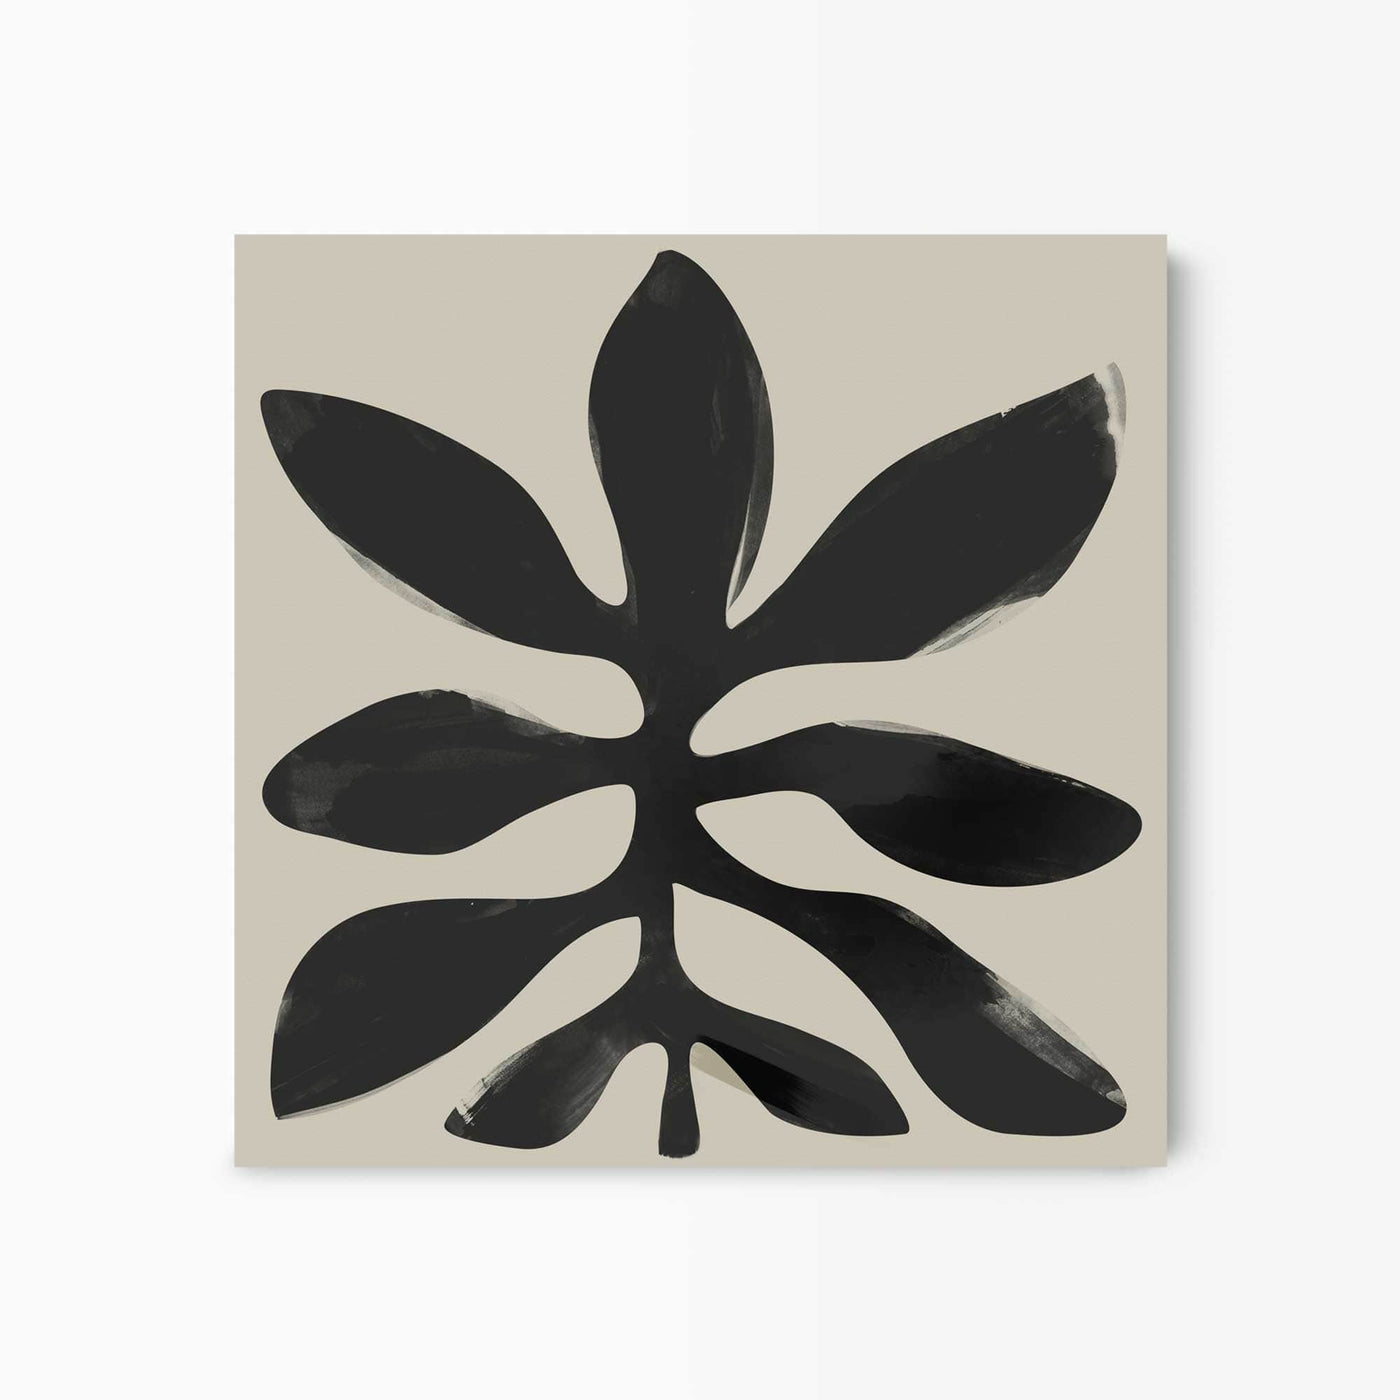 Green Lili 30x30cm (12x12") / Unframed Print Botanical Leaf Abstract Art Print